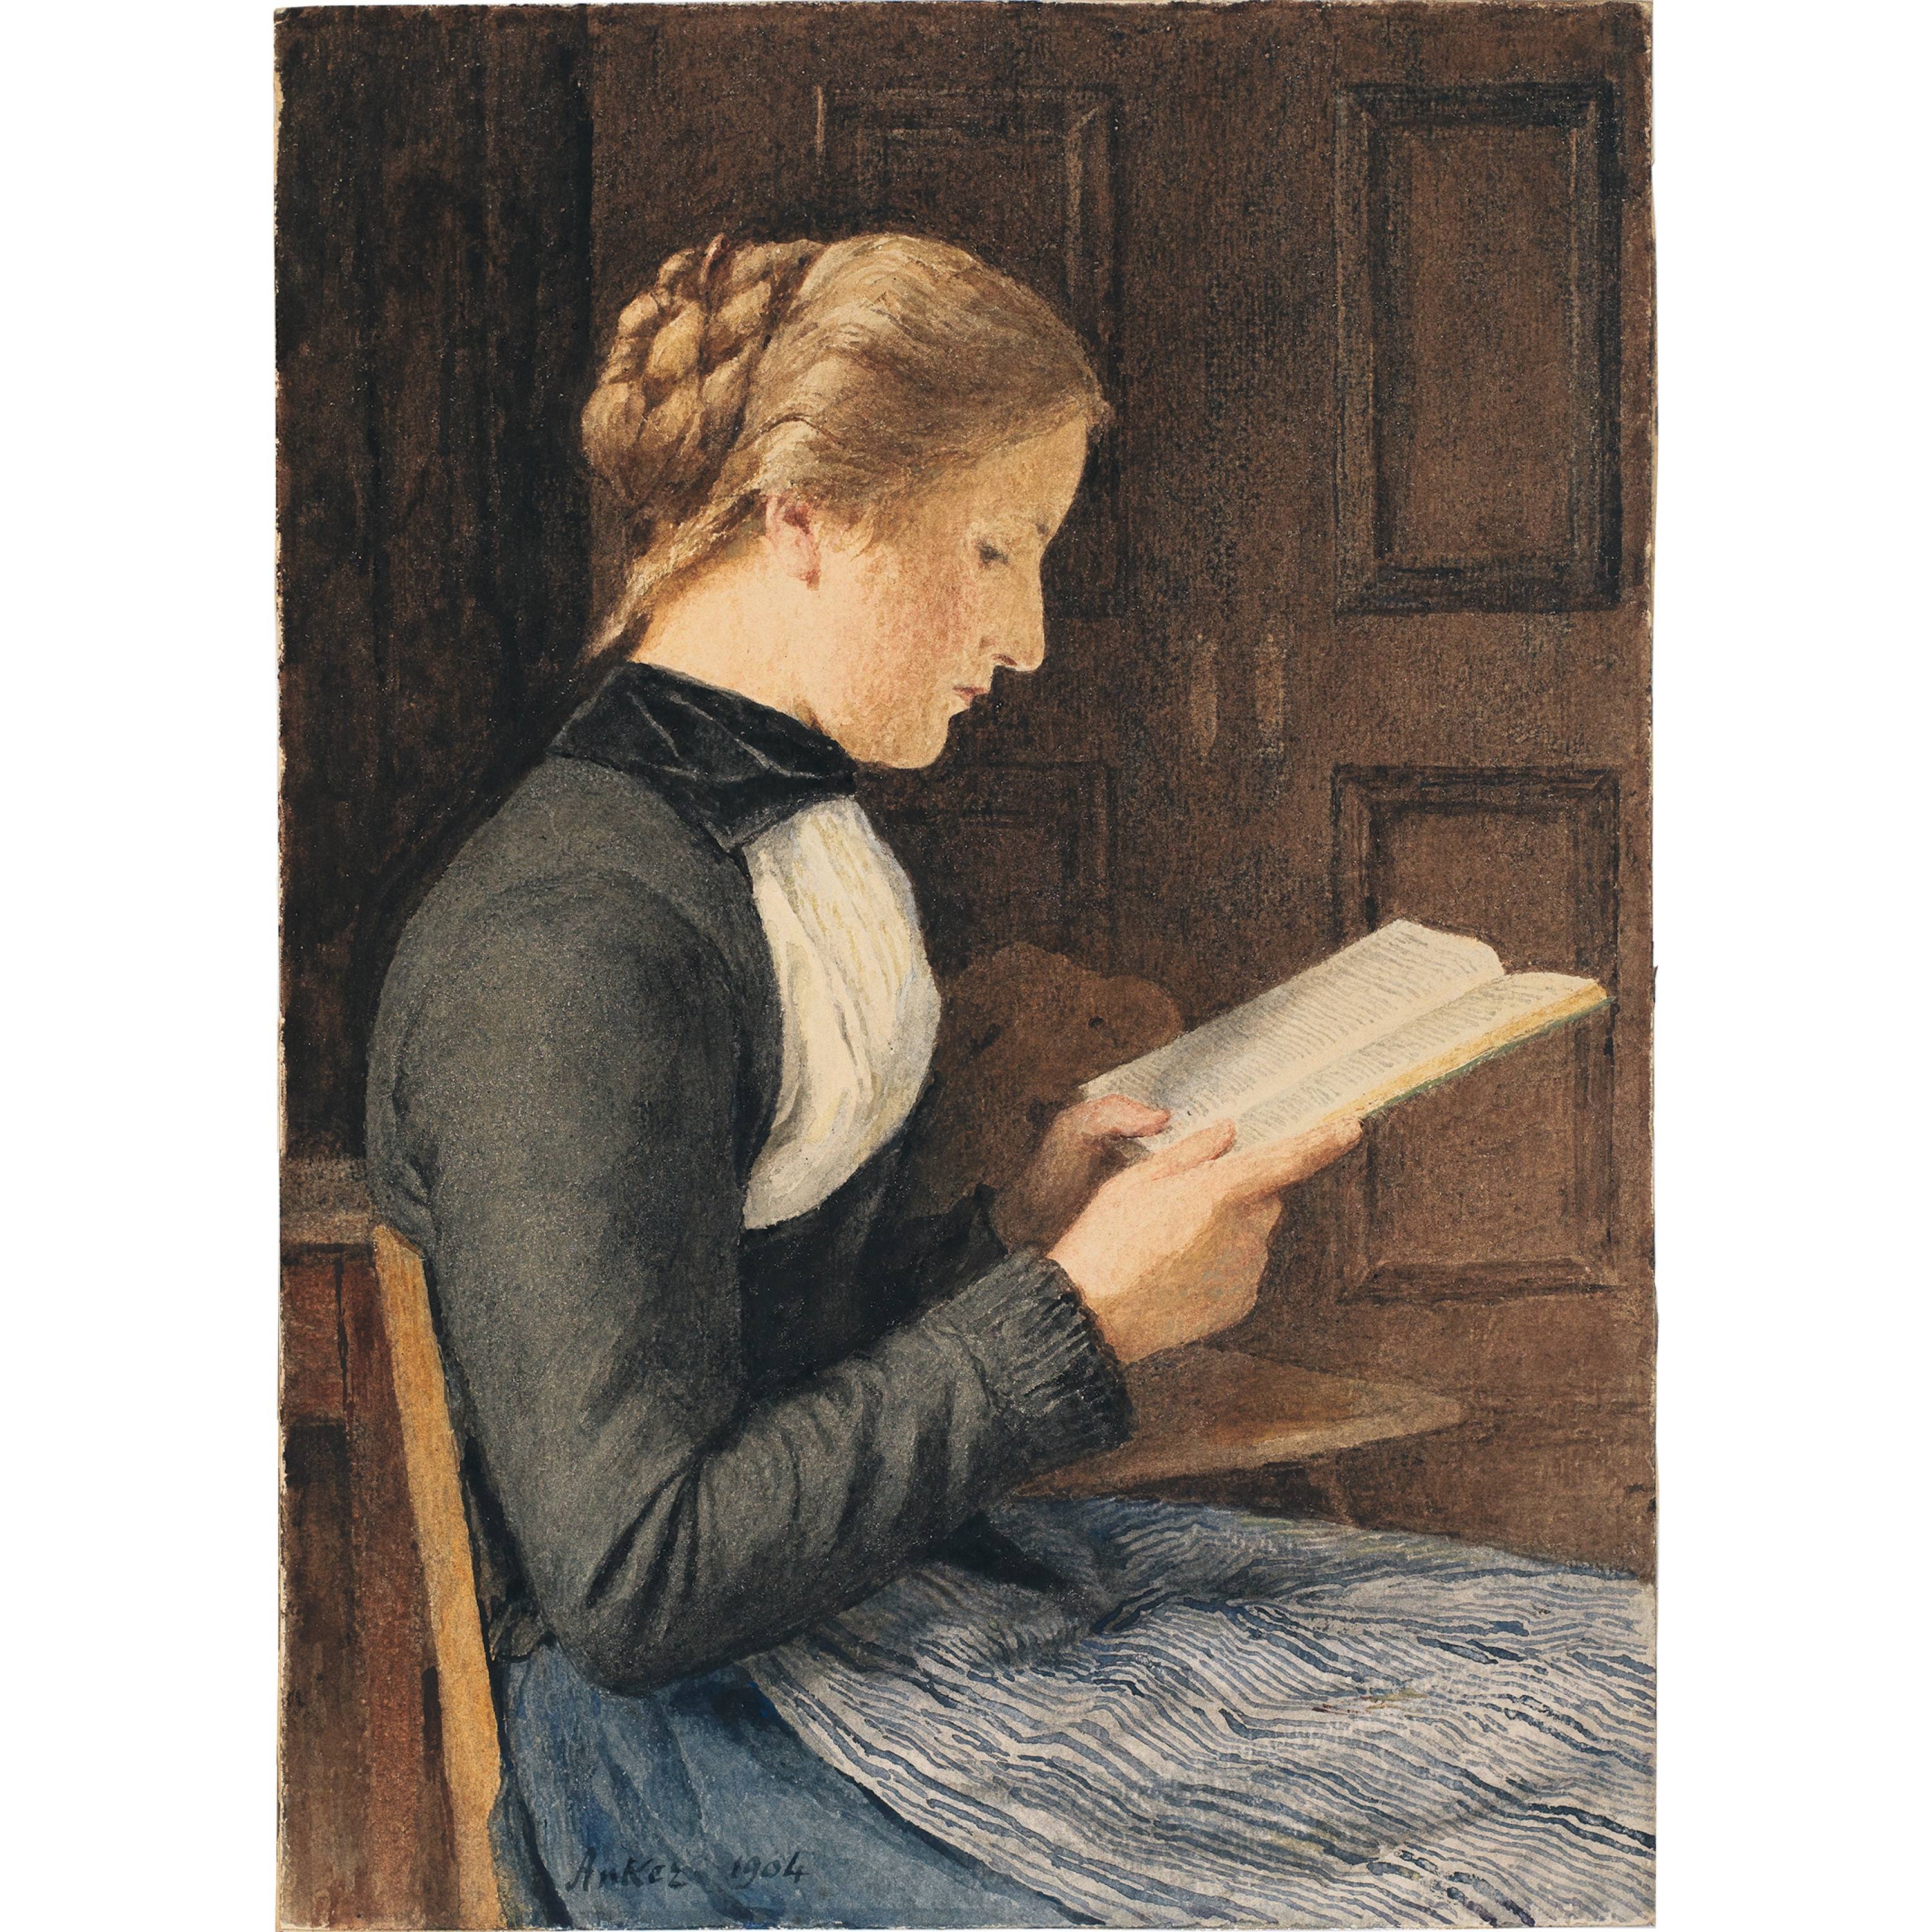 Lesende junge Frau / Lesendes Mädchen by Albert Anker, 1904